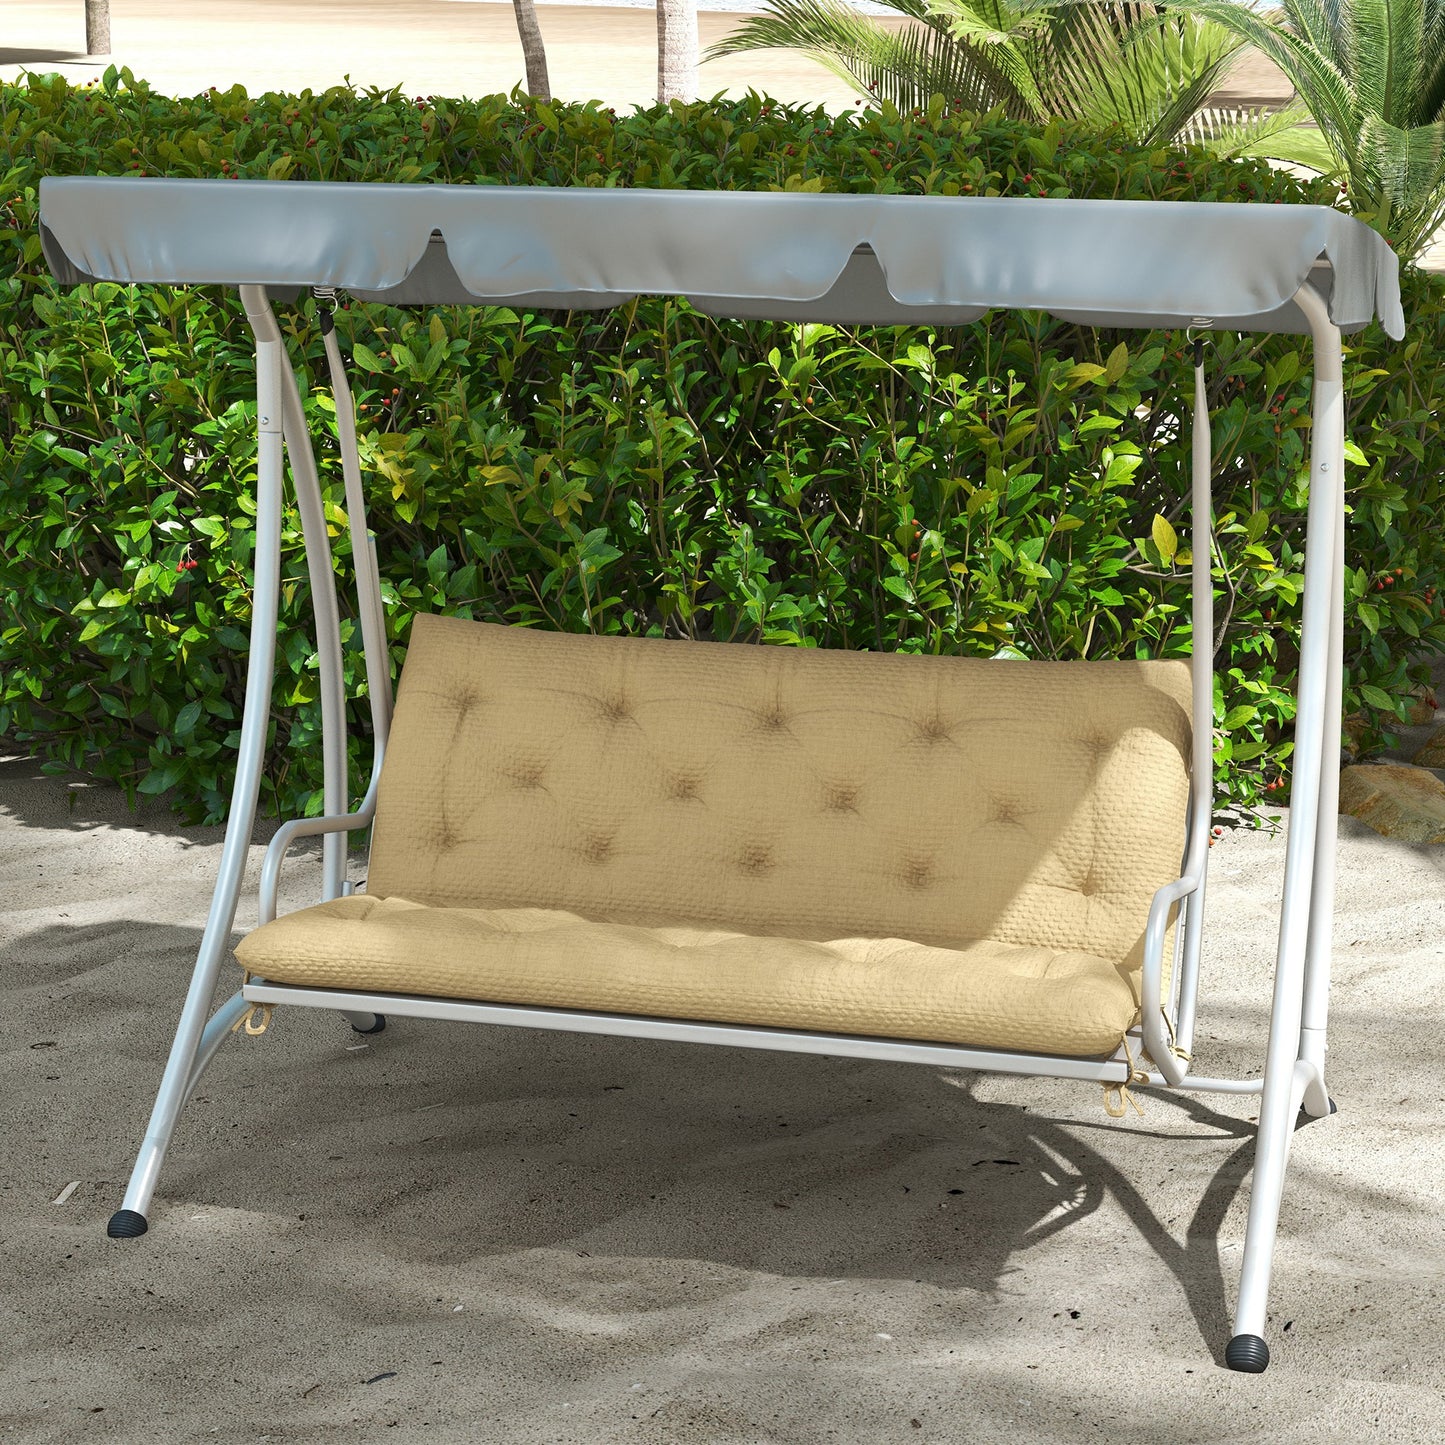 2 Seater Garden Bench Cushions With Backrest for Garden Patio, Khaki